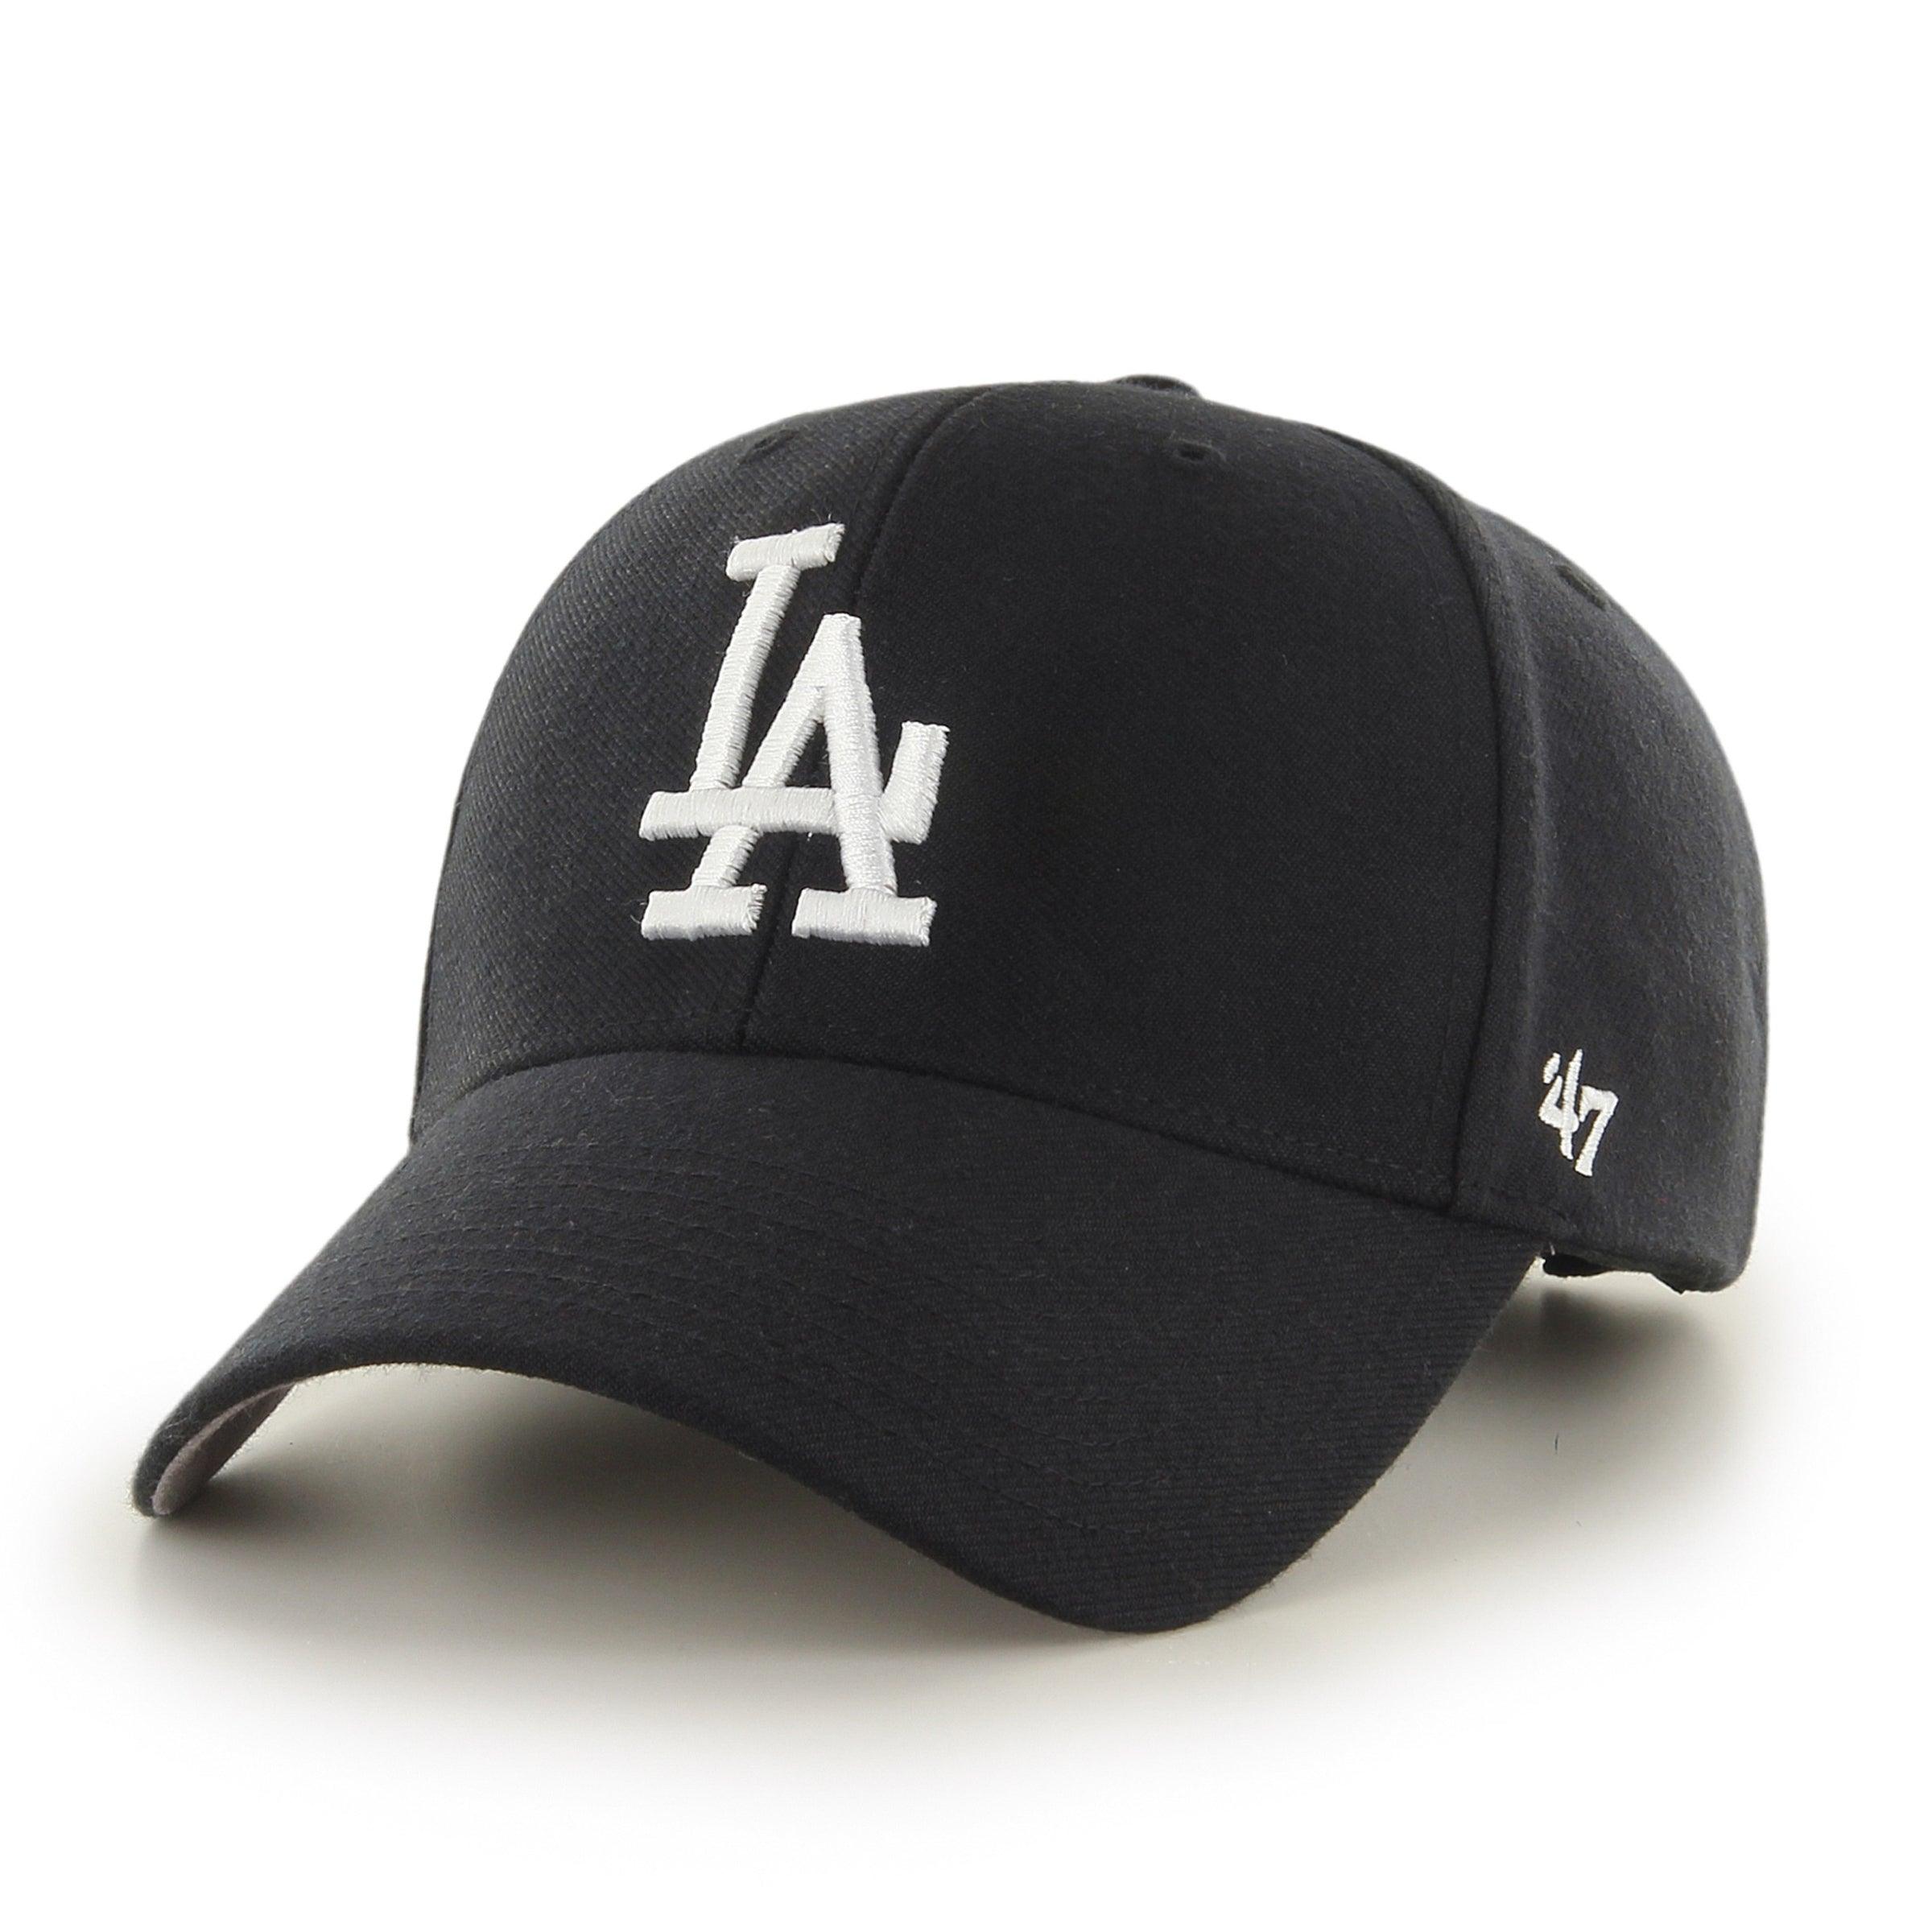 Gorra 47 MLB Los Angeles Dodgers